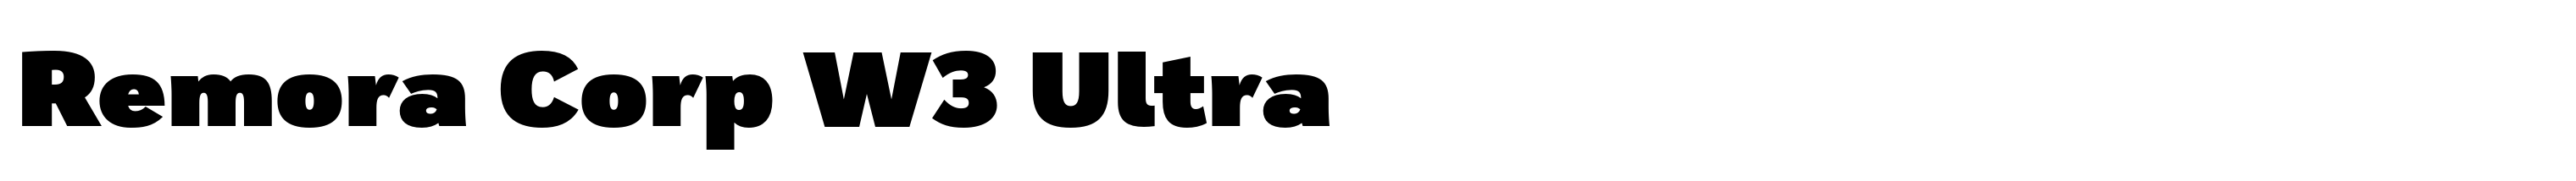 Remora Corp W3 Ultra